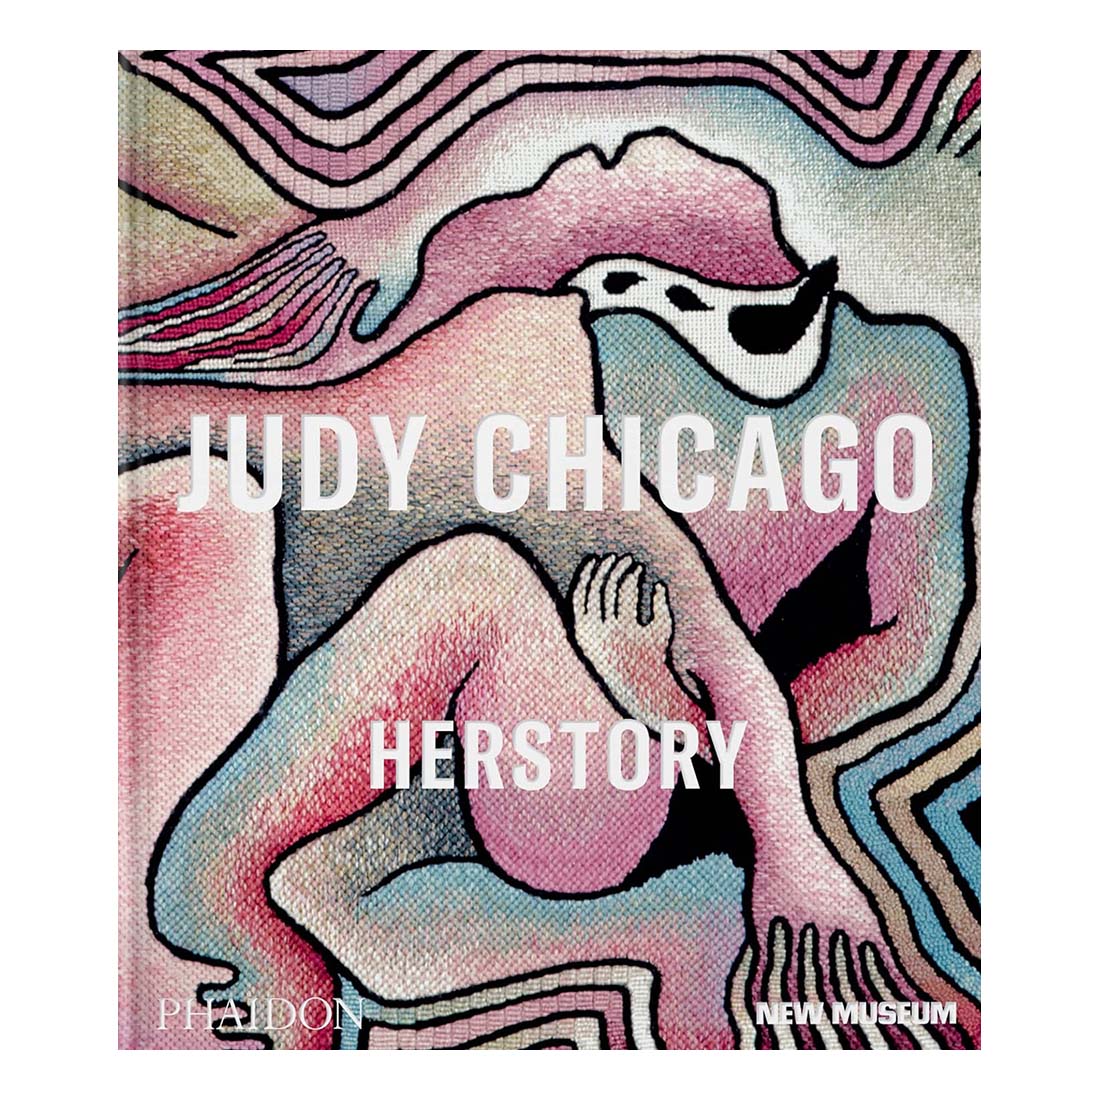 Judy Chicago: Herstory